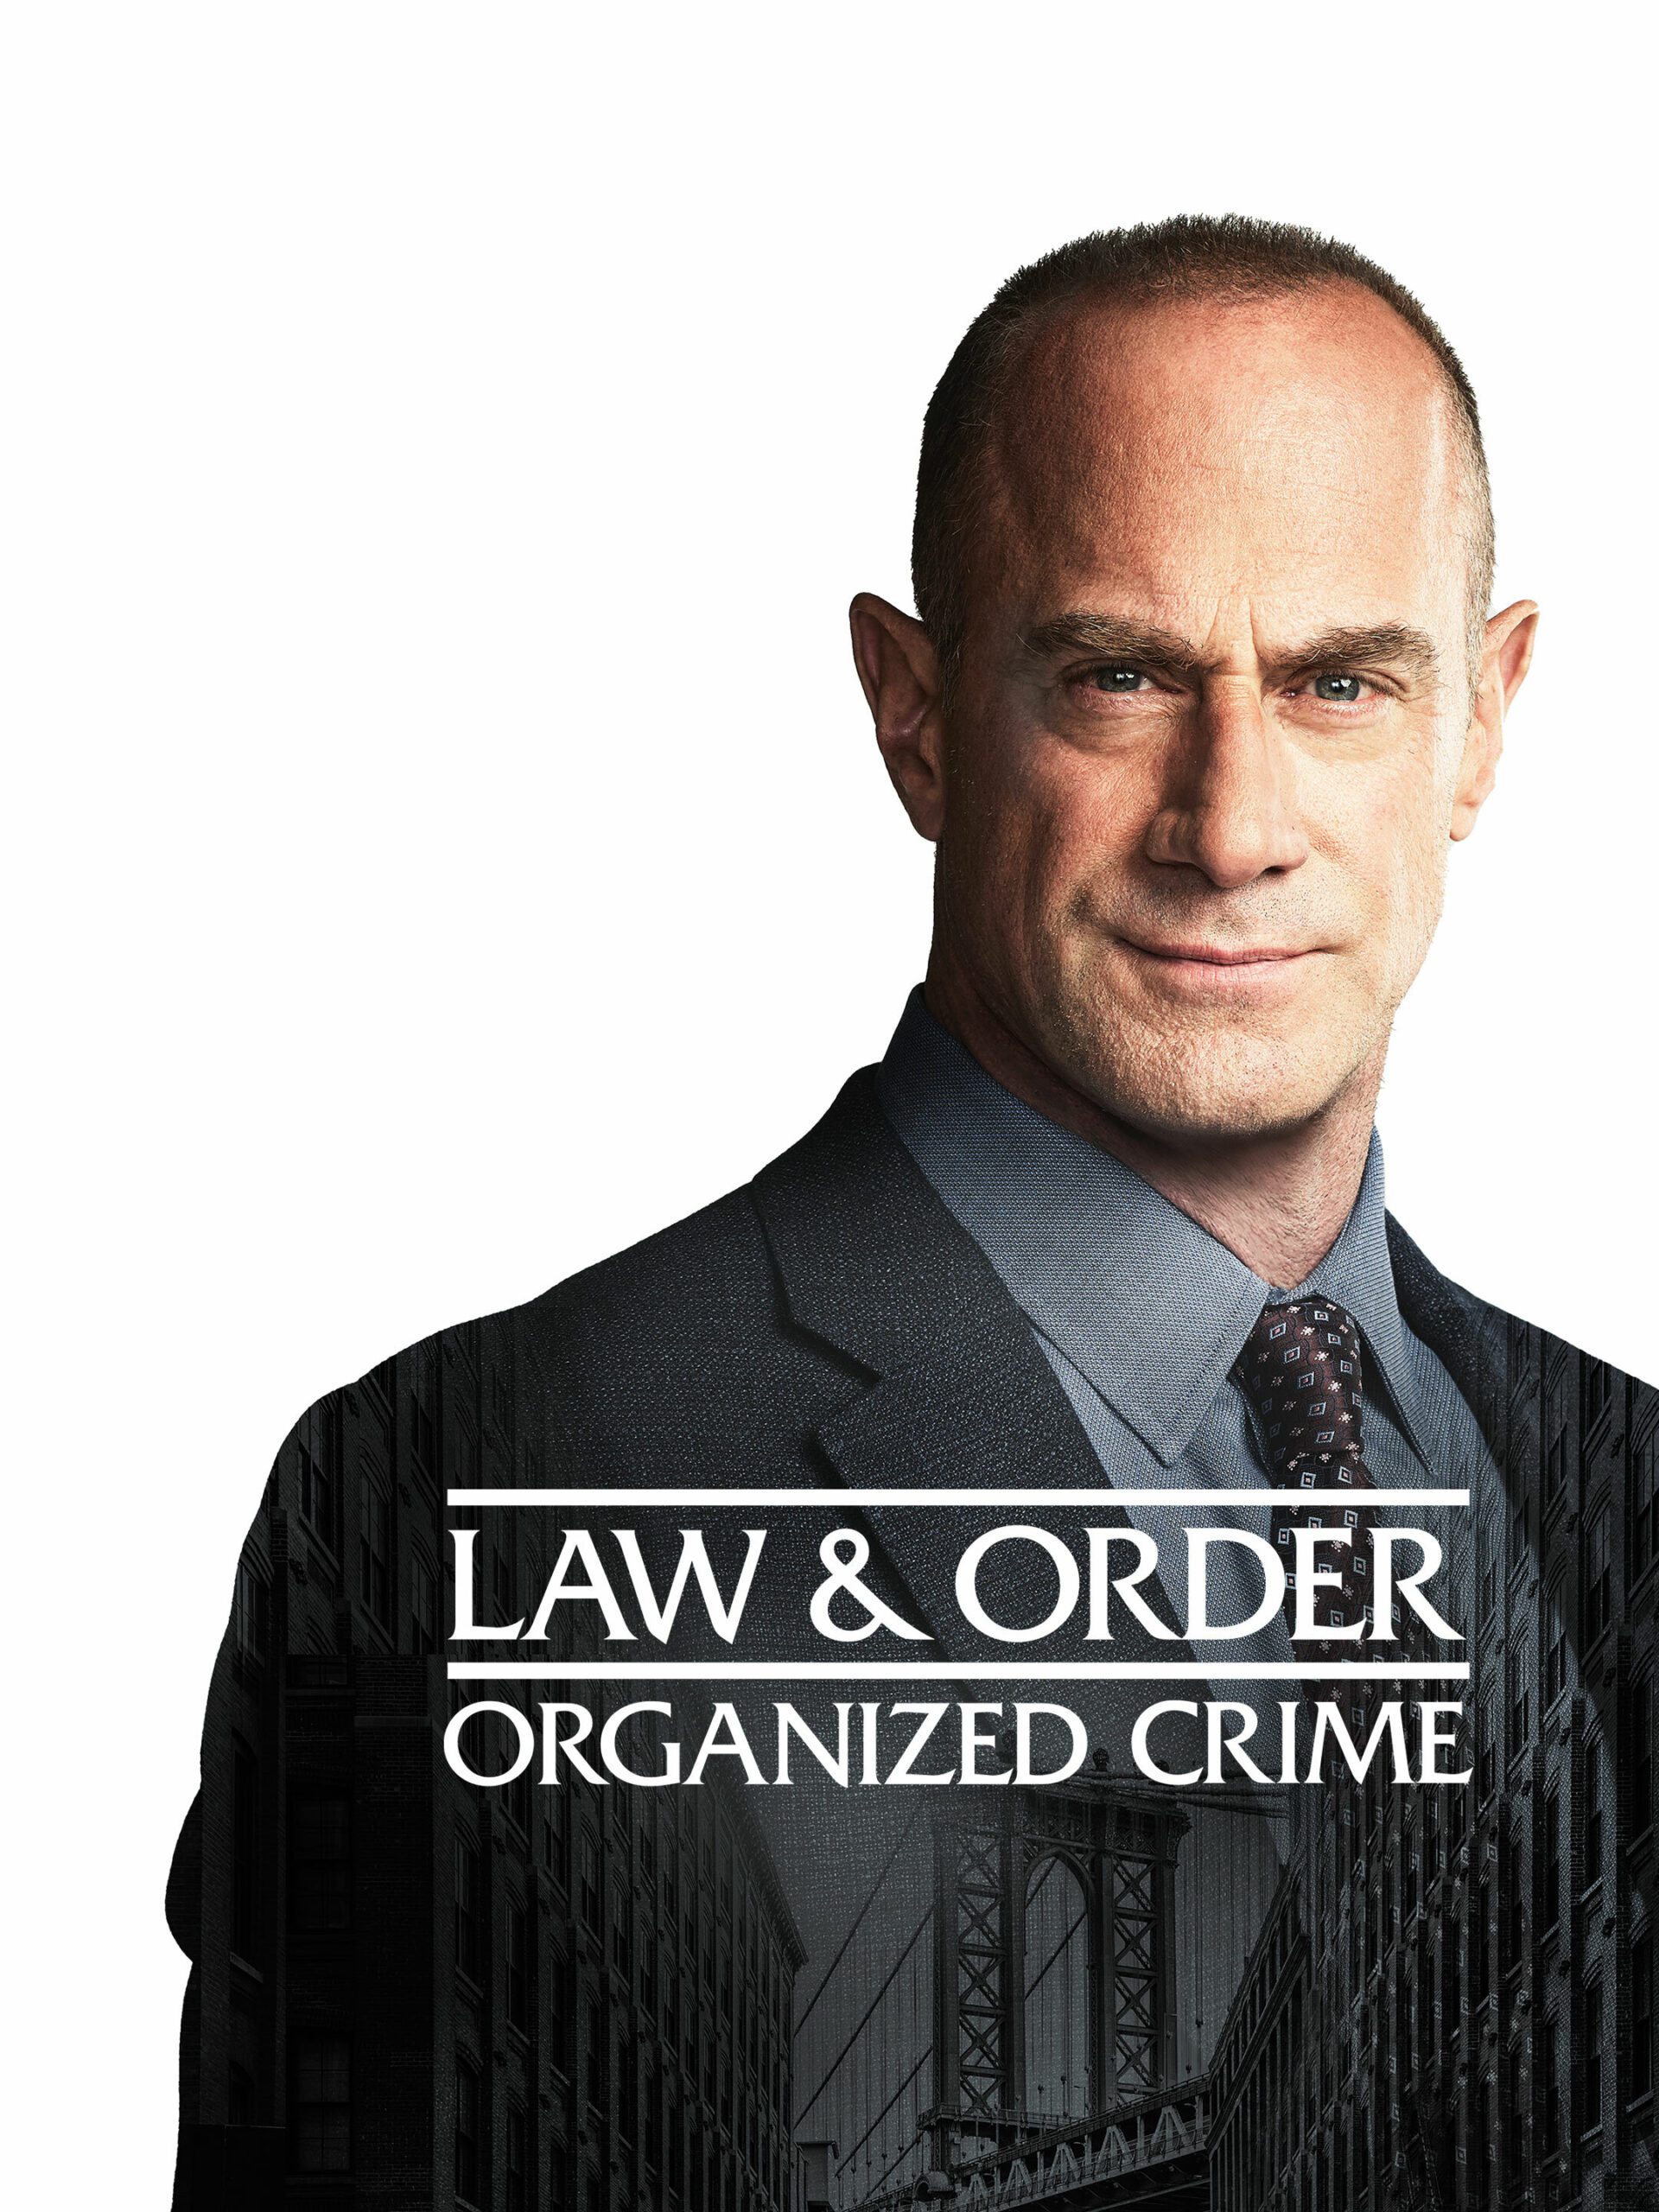 Law & Order: Organized Crime teaser image